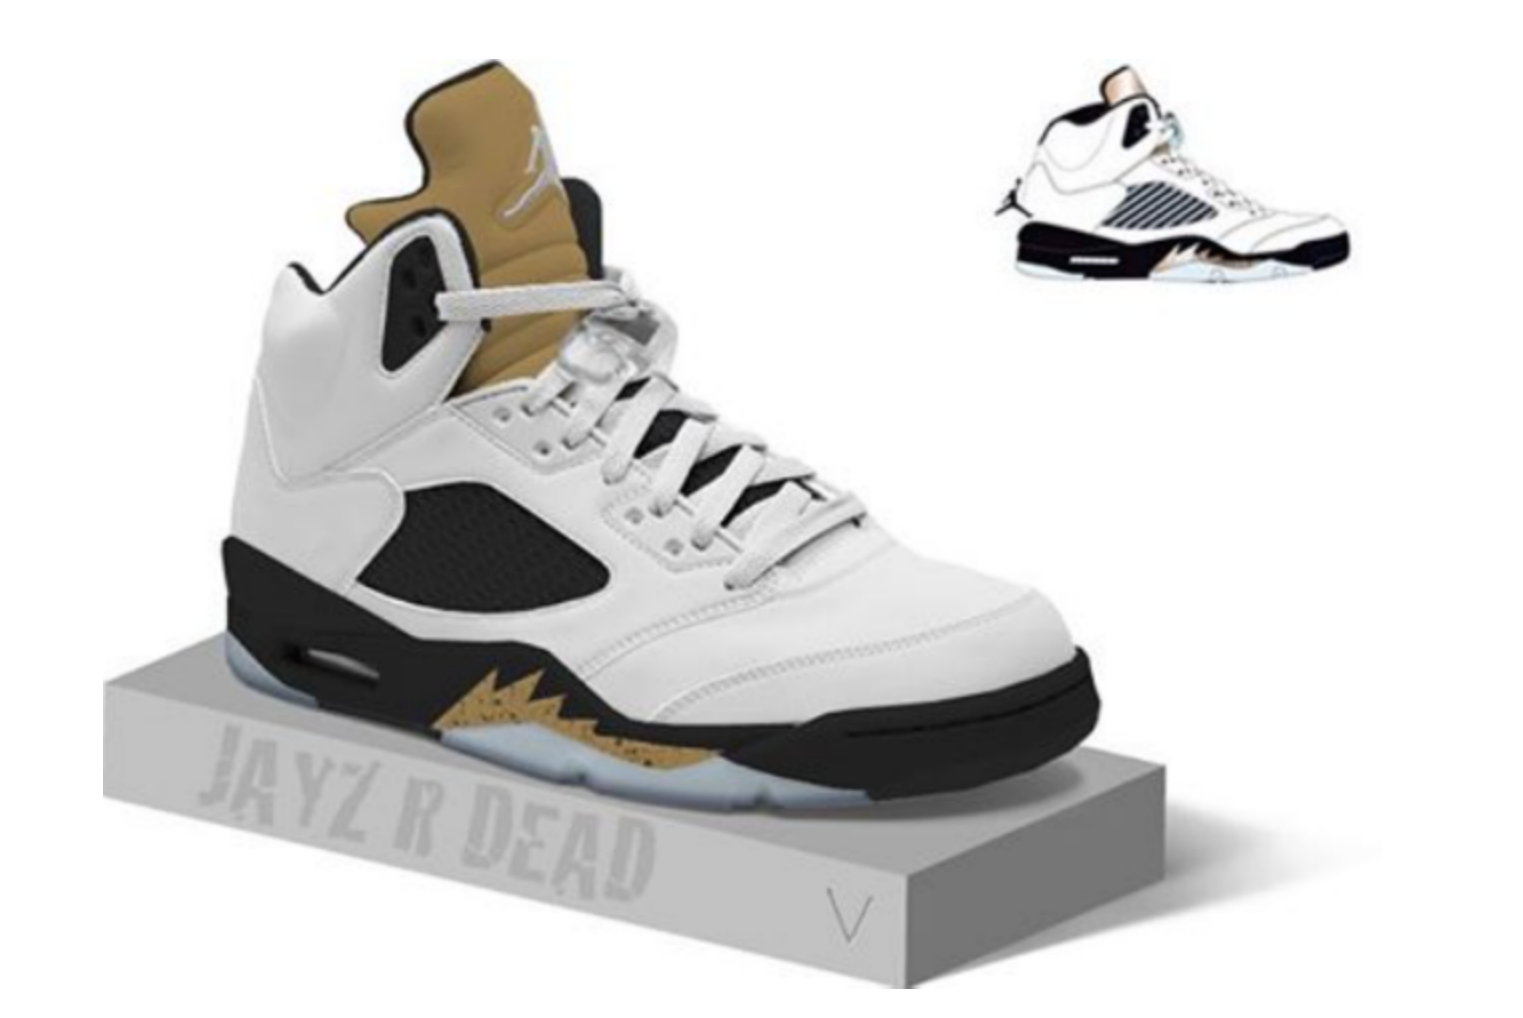 Air Jordan 5 Olympic White Black Gold Release Date